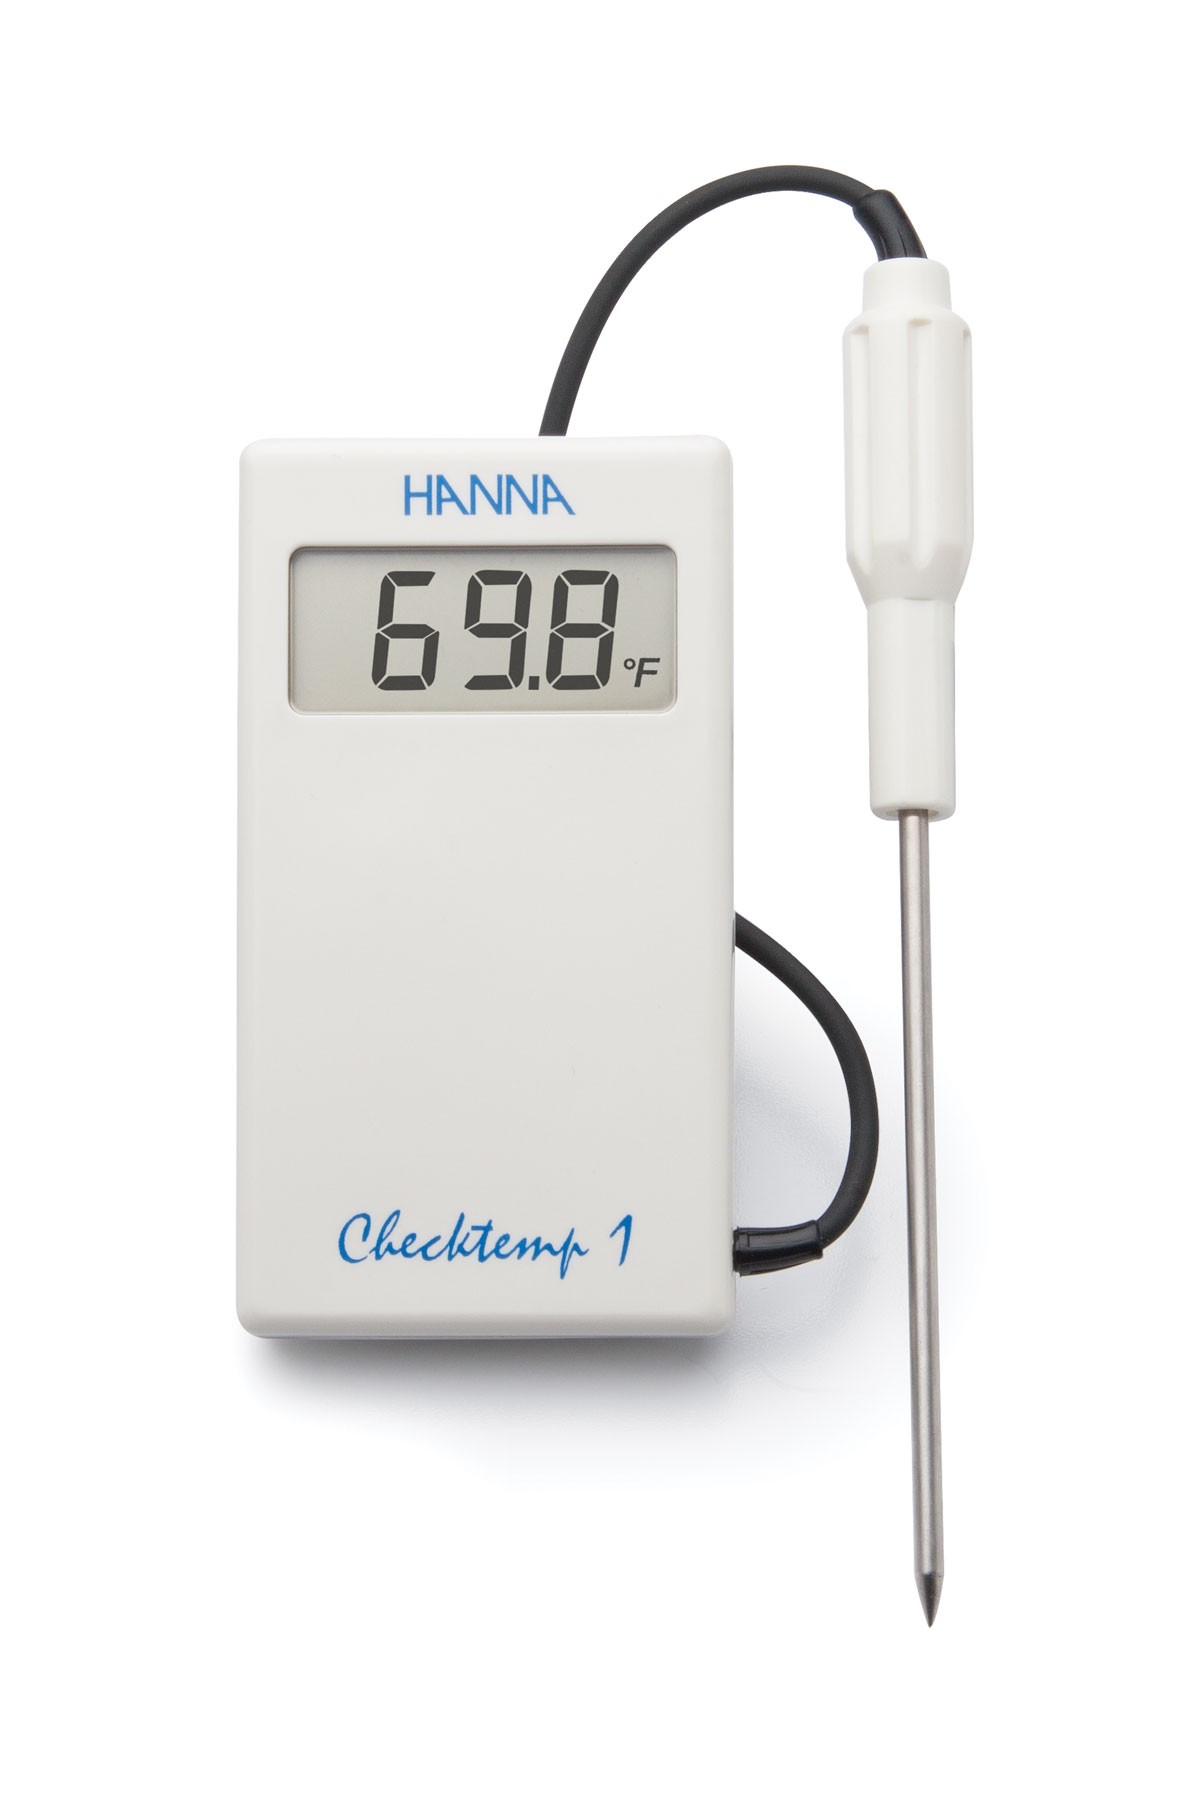 Checktemp® 1 Digital Thermometer - HI98509 - Hanna Instruments